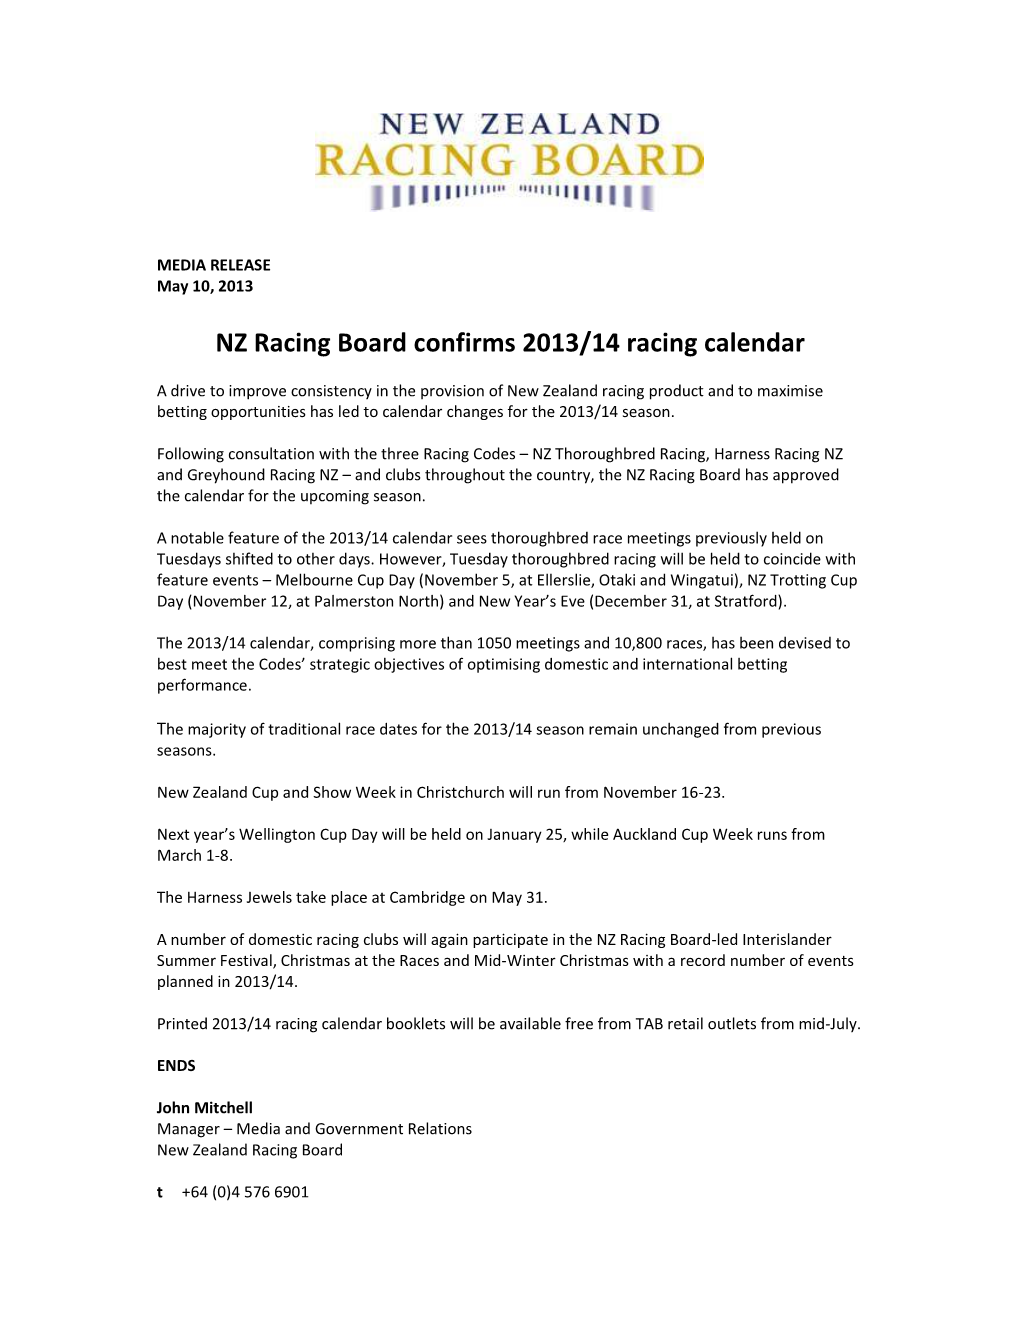 NZ Racing Board Confirms 2013/14 Racing Calendar